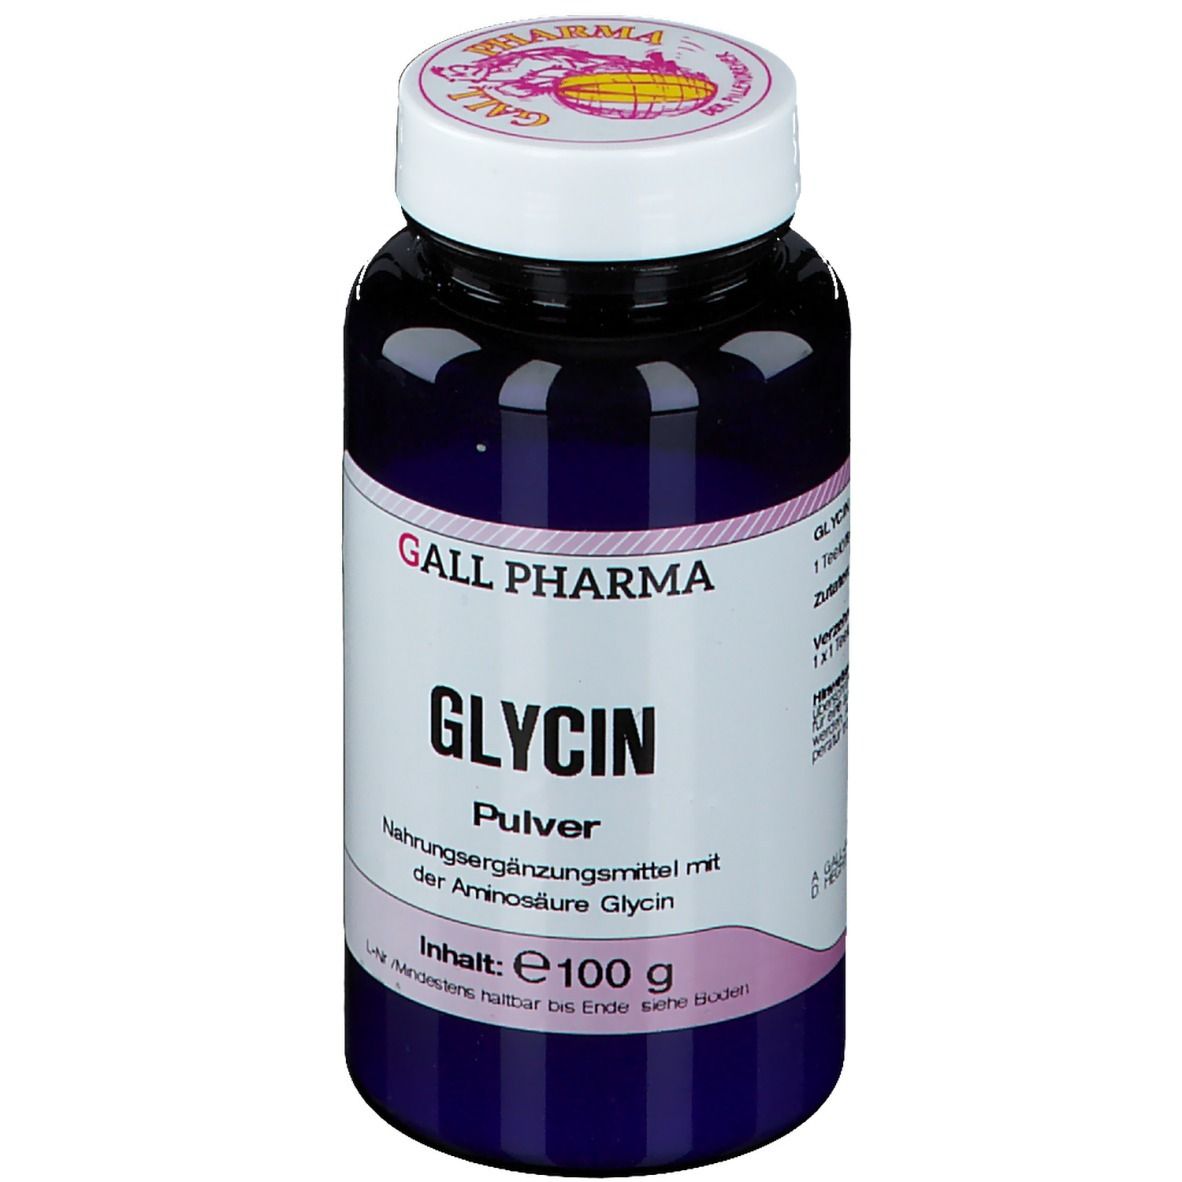 GALL PHARMA Glycin Pulver